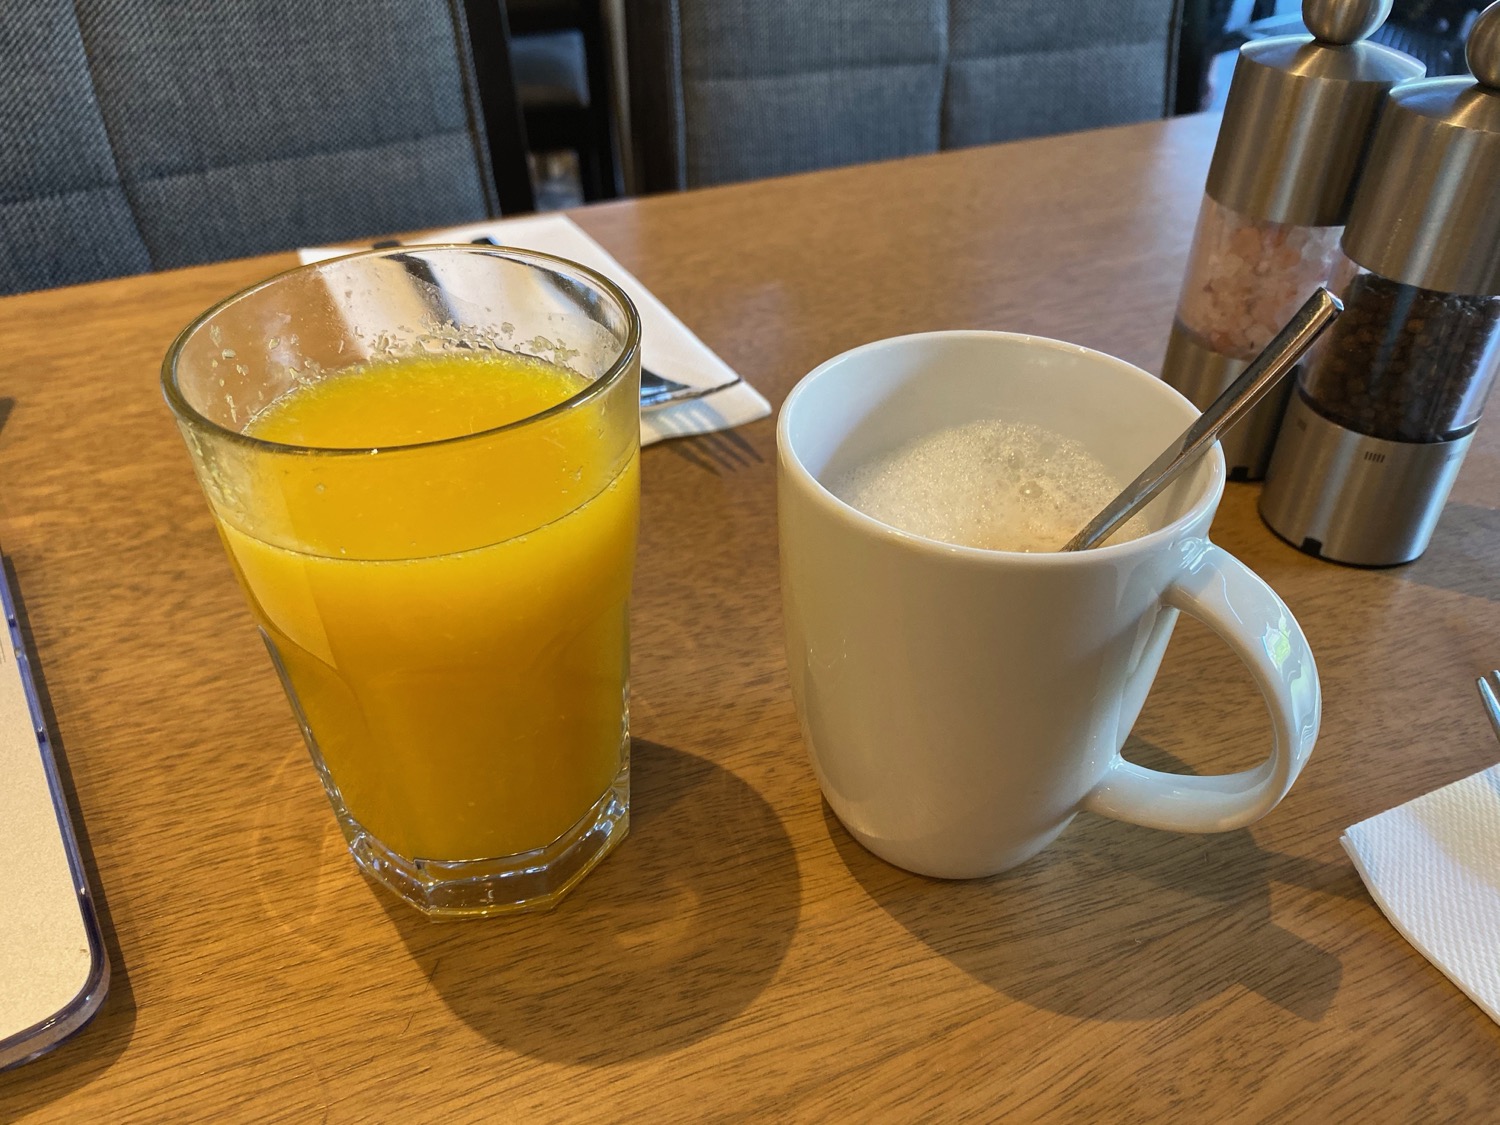 a glass of orange juice next to a mug of coffee